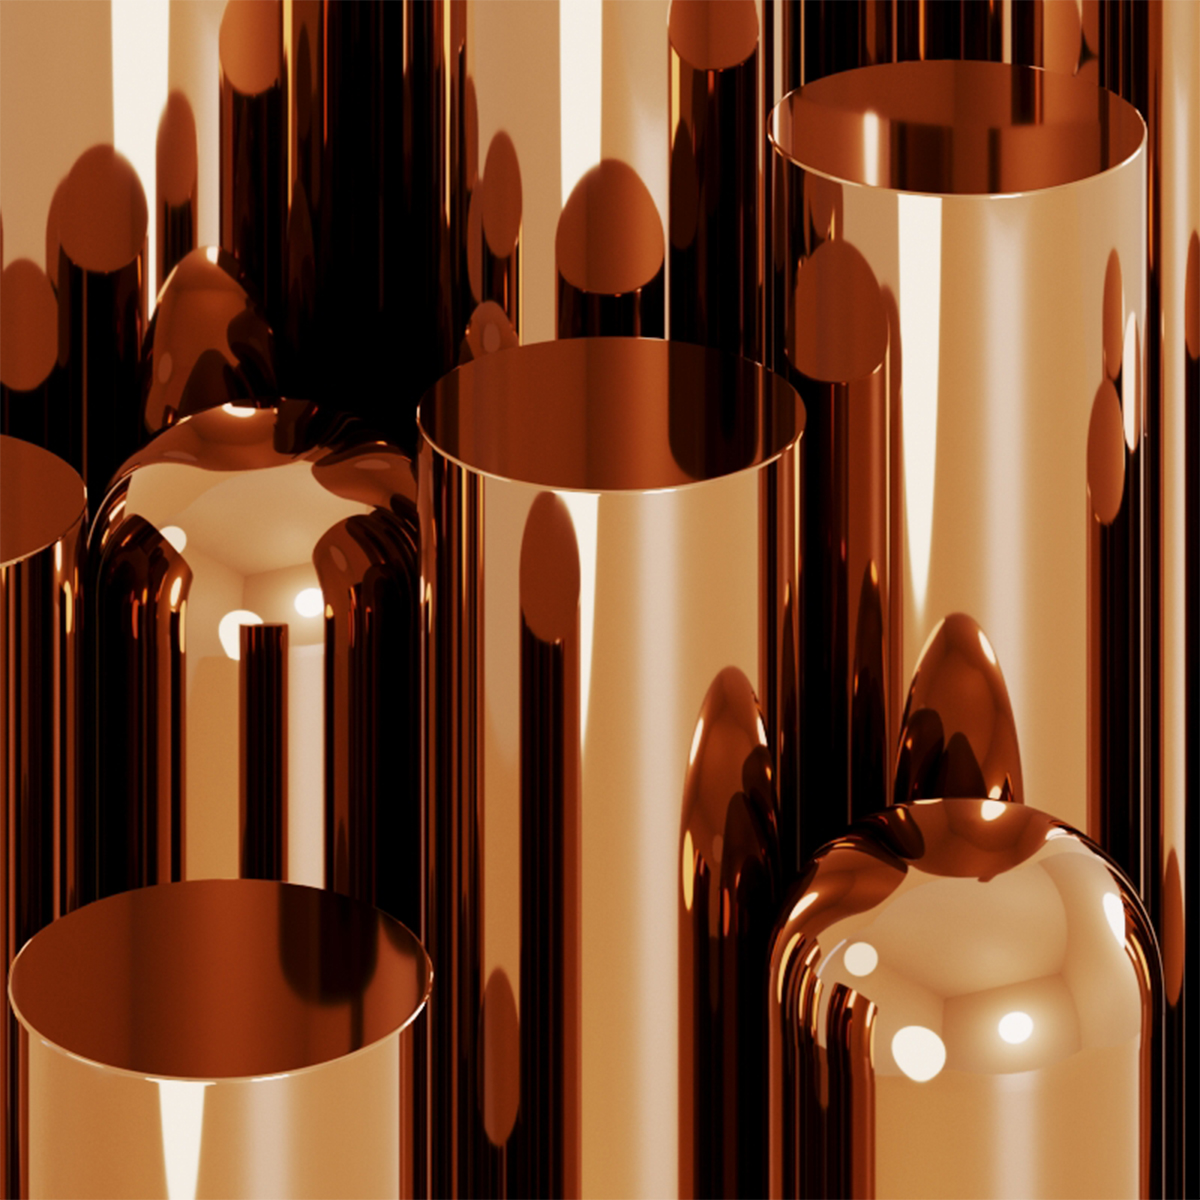 Steel - polished copper